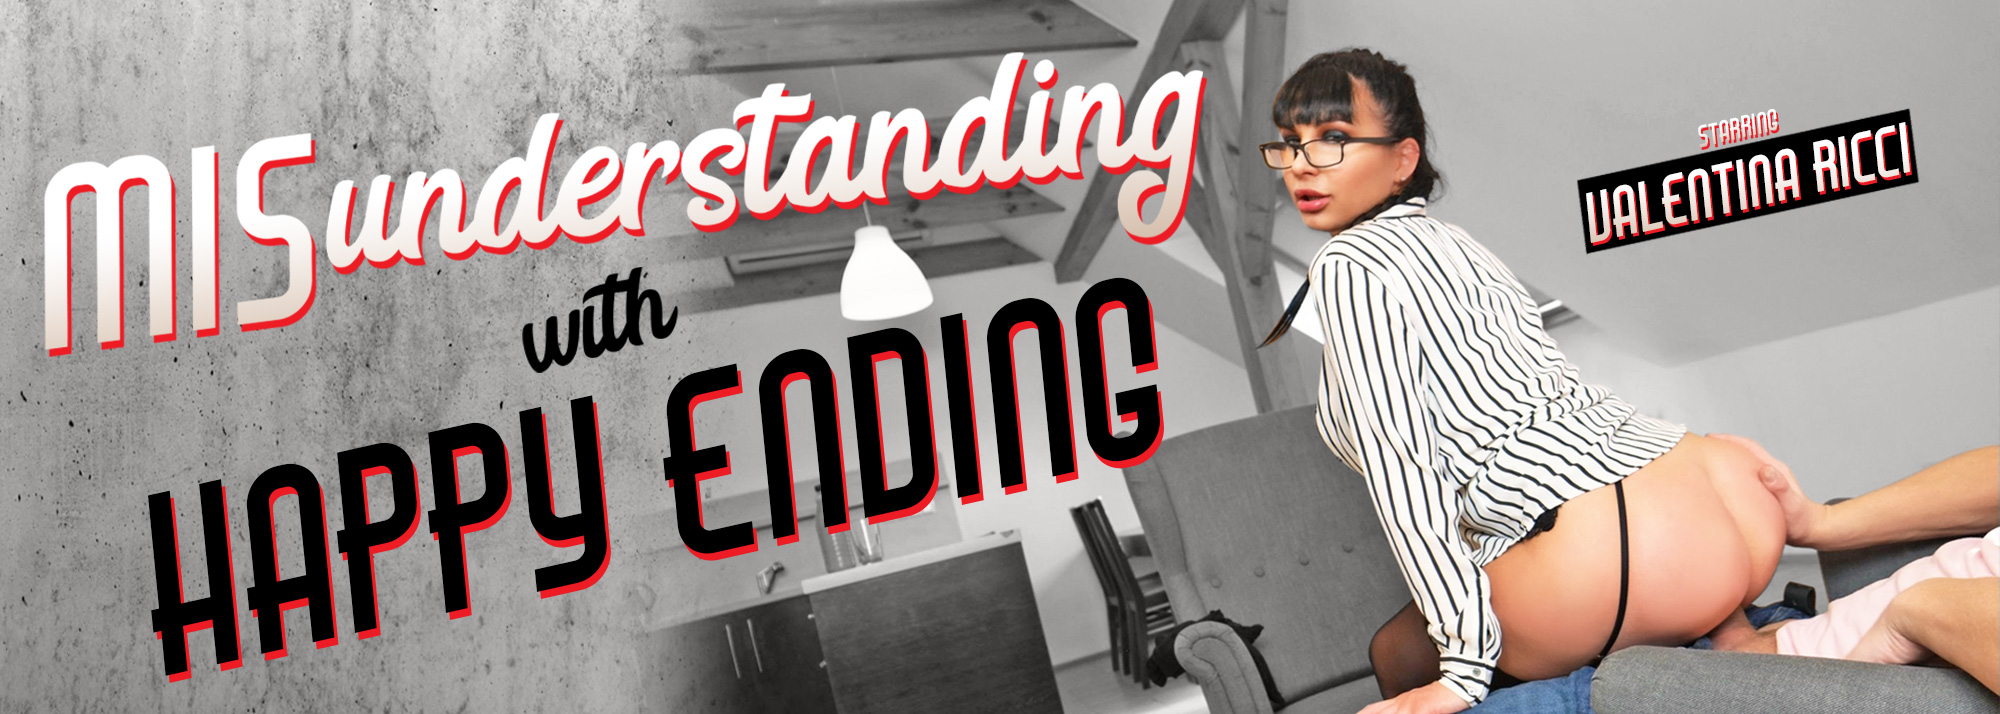 Misunderstanding with Happy Ending with Valentina Ricci  Slideshow